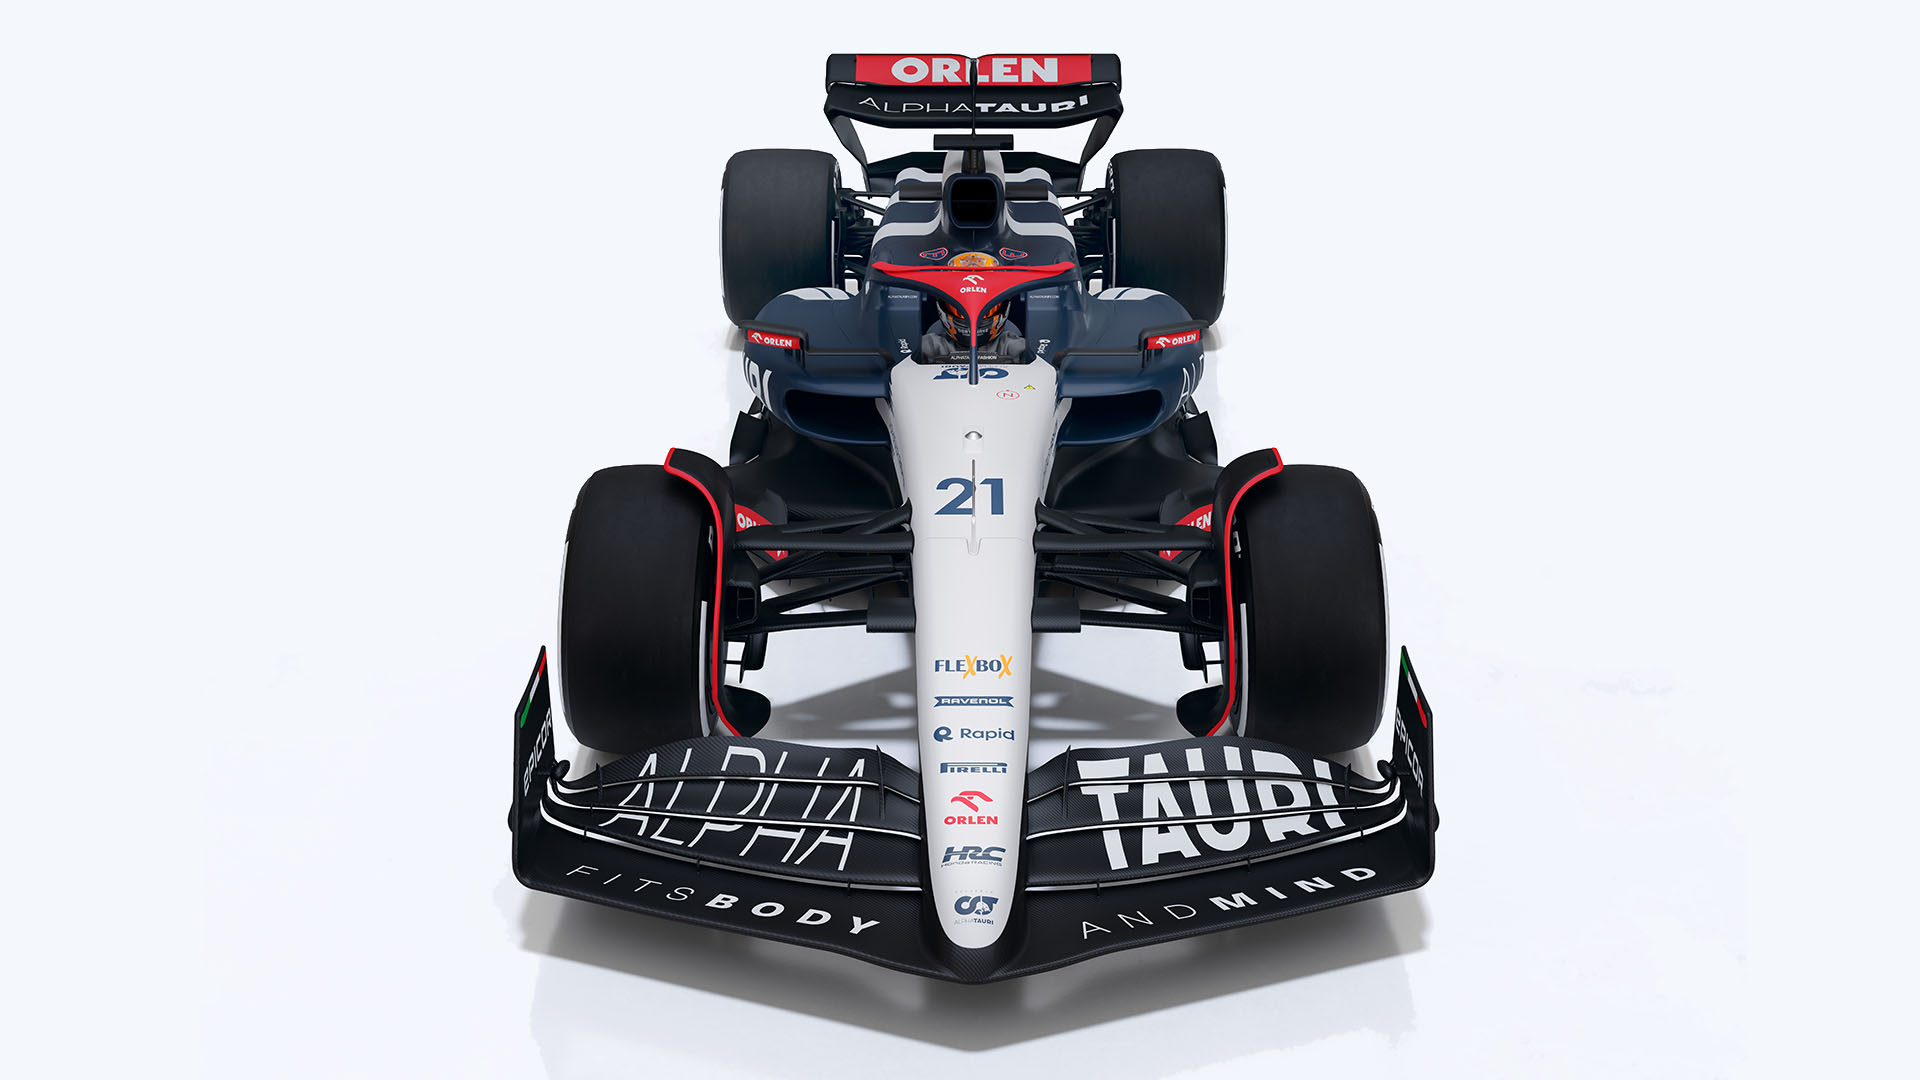 Formula 1 Formula Cars Scuderia ALPHATAURi Toro Rosso Race Cars Simple Background White Background M 1920x1080